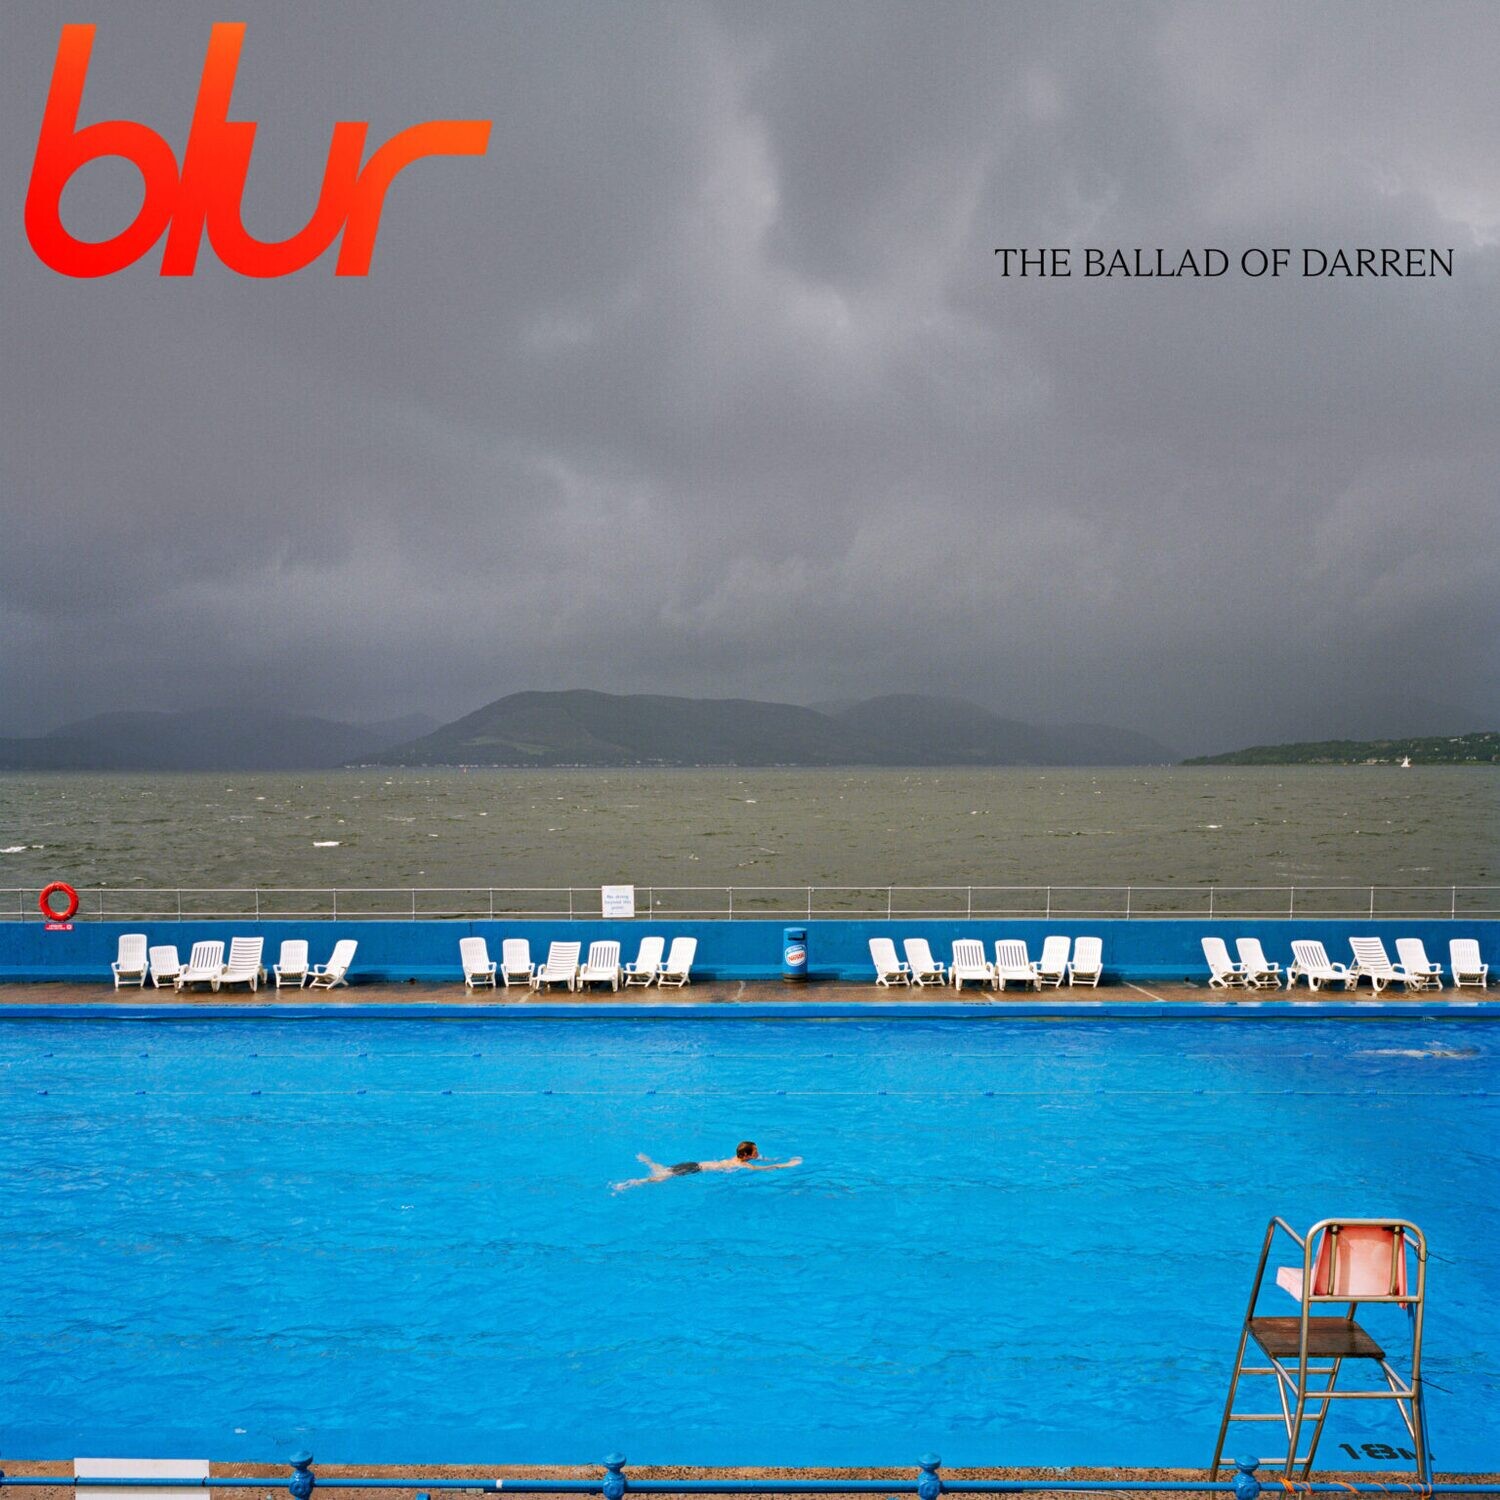 Blur - The Ballad Of Darren (Sky Blue colored 180-gram vinyl)